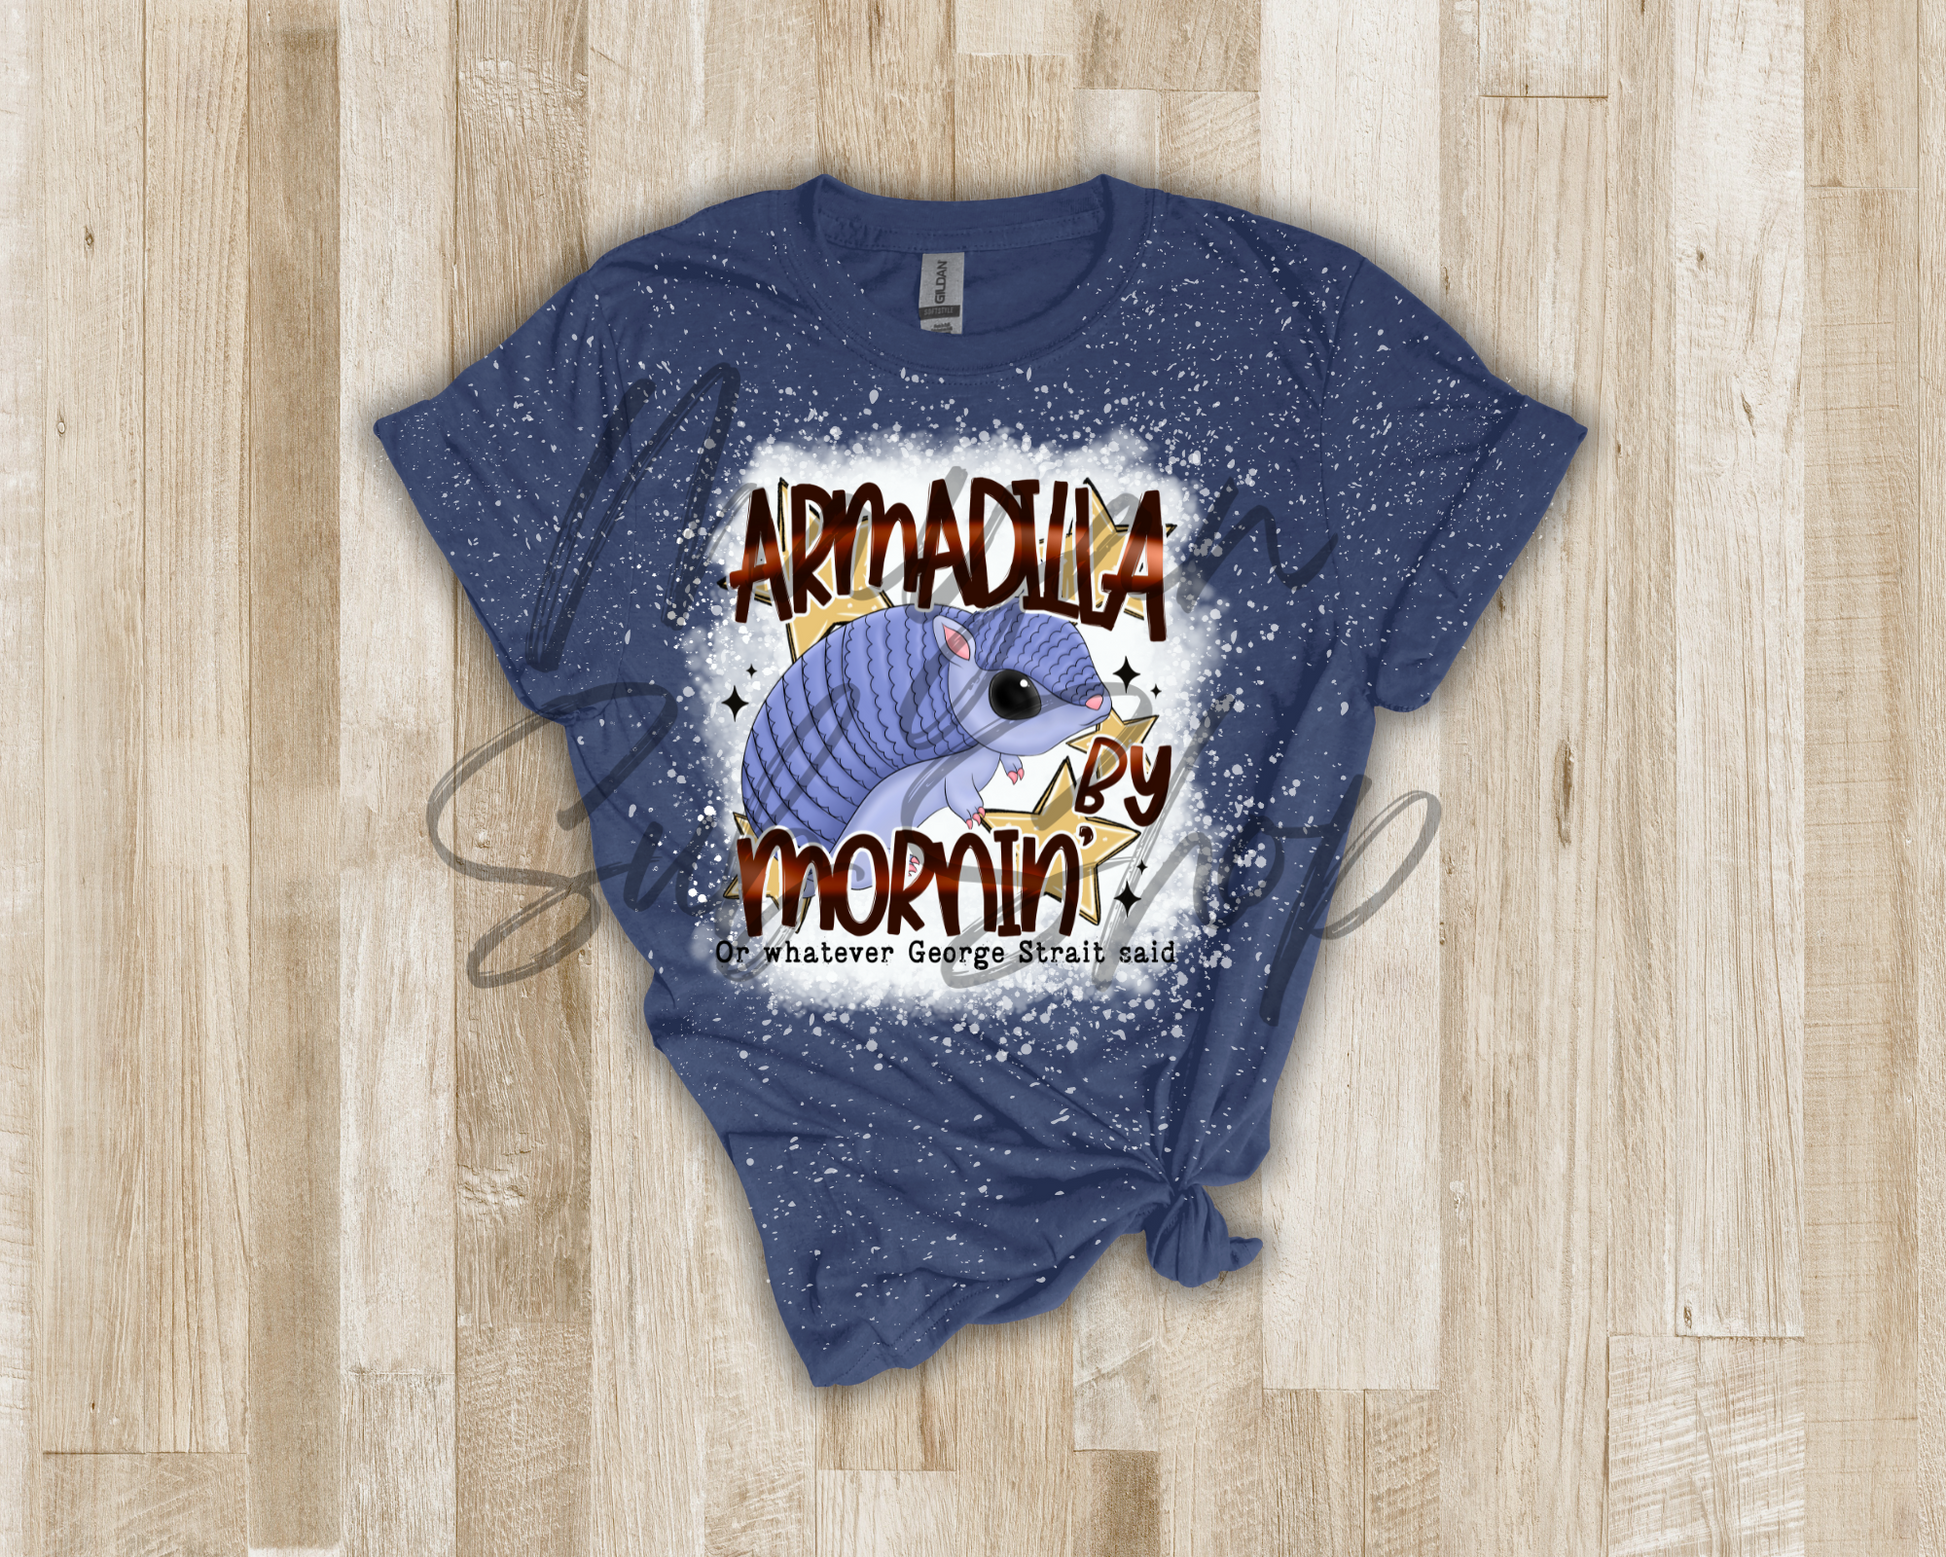 Armadilla by Mornin' bleached shirt - Mayan Sub Shop